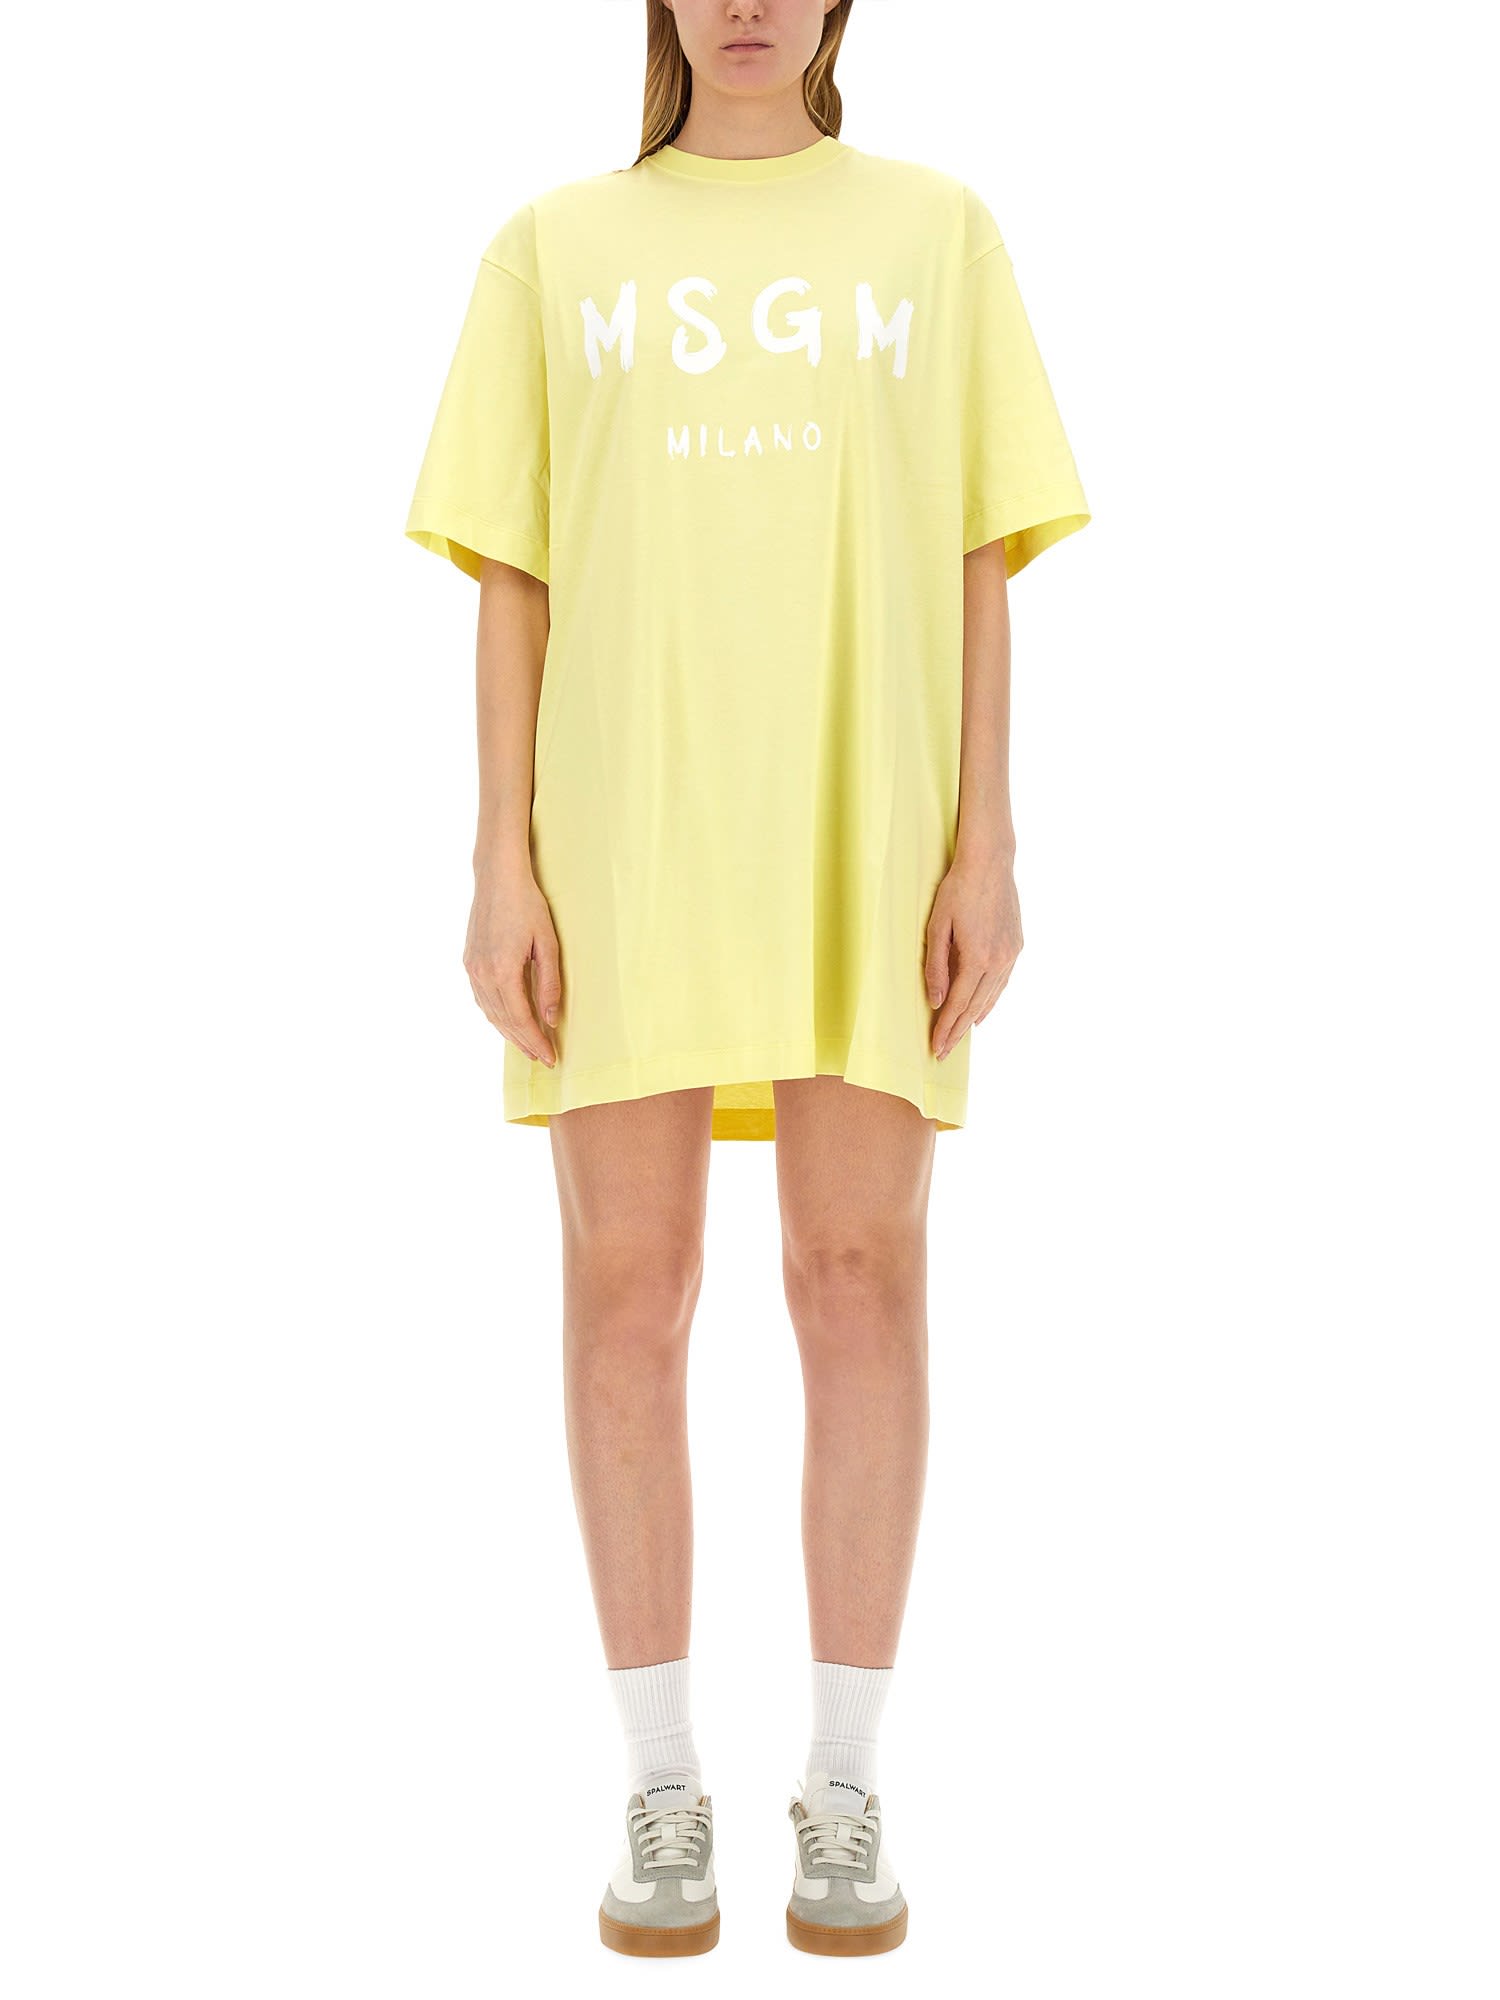 MSGM T-SHIRT DRESS